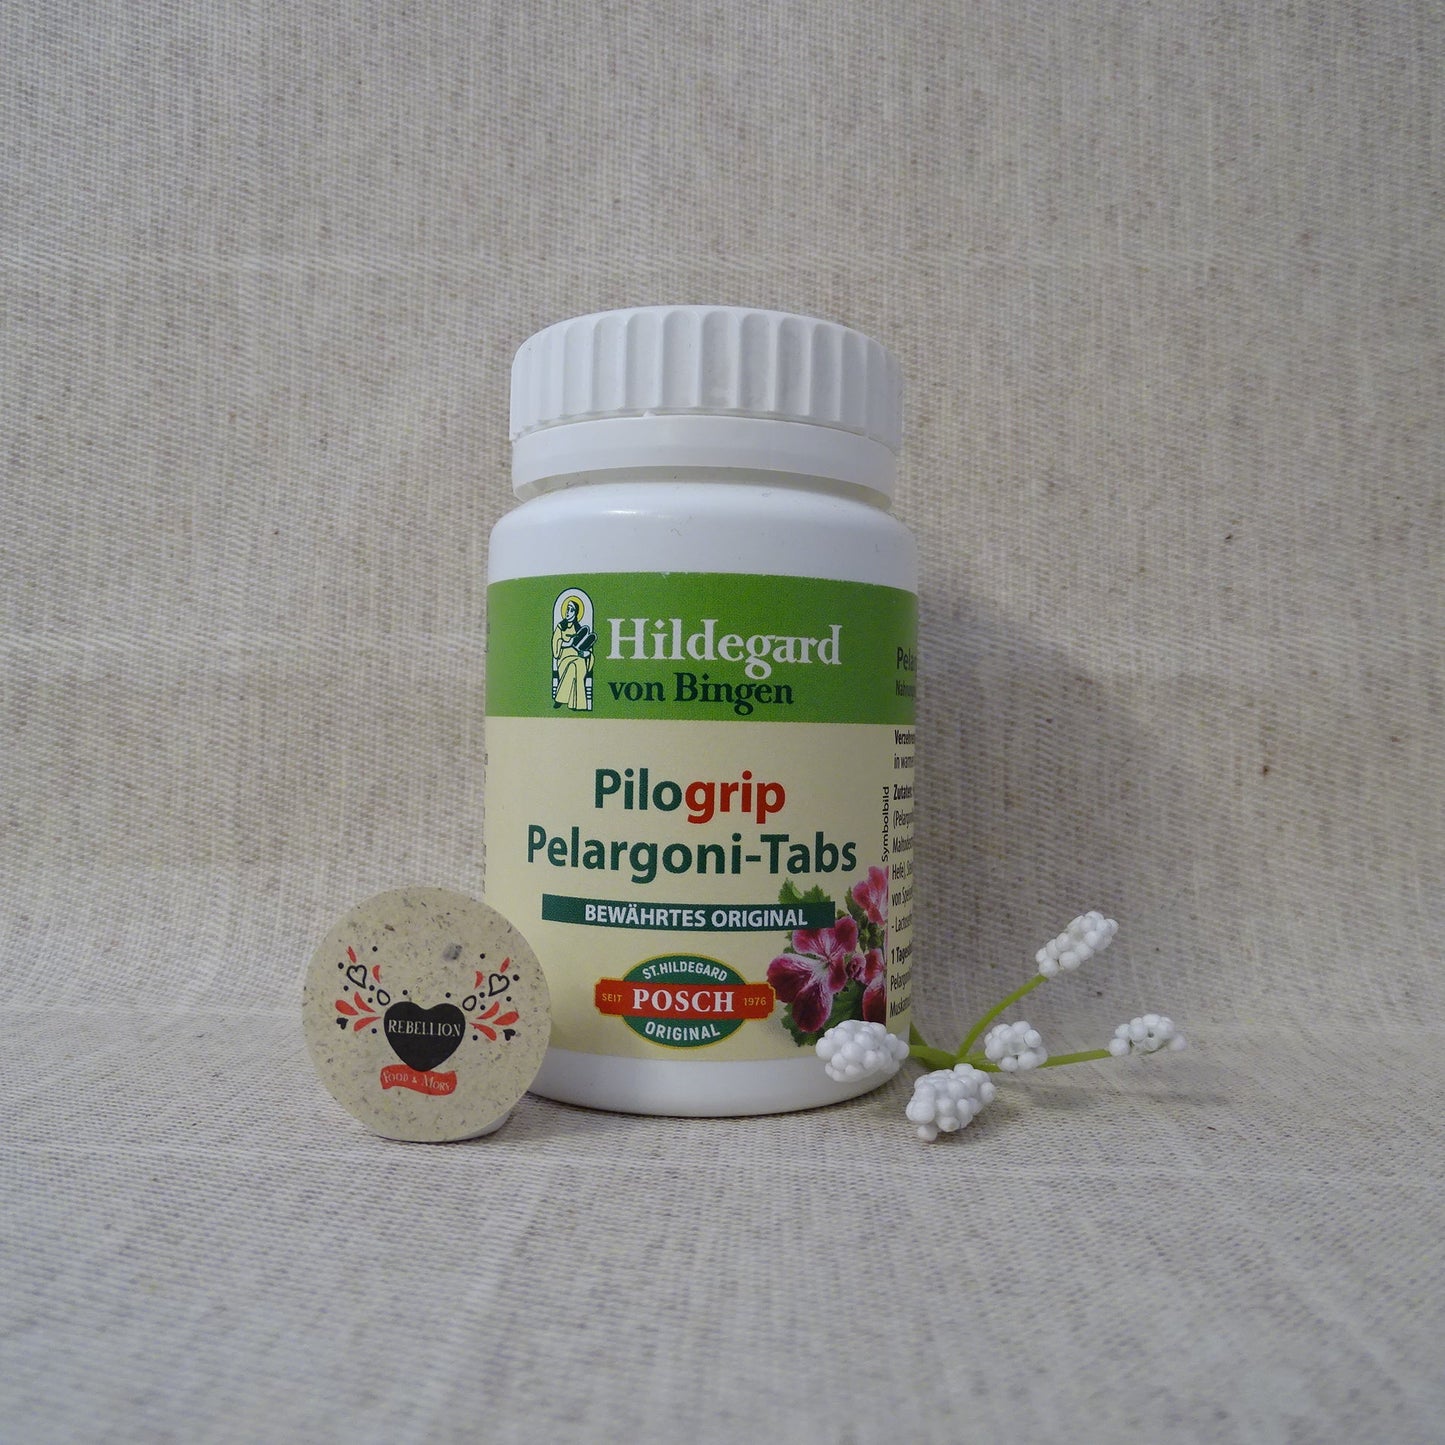 Pilogrip® Pelargoni Tabs St.Hildegard Posch Confezione tascabile da 25g